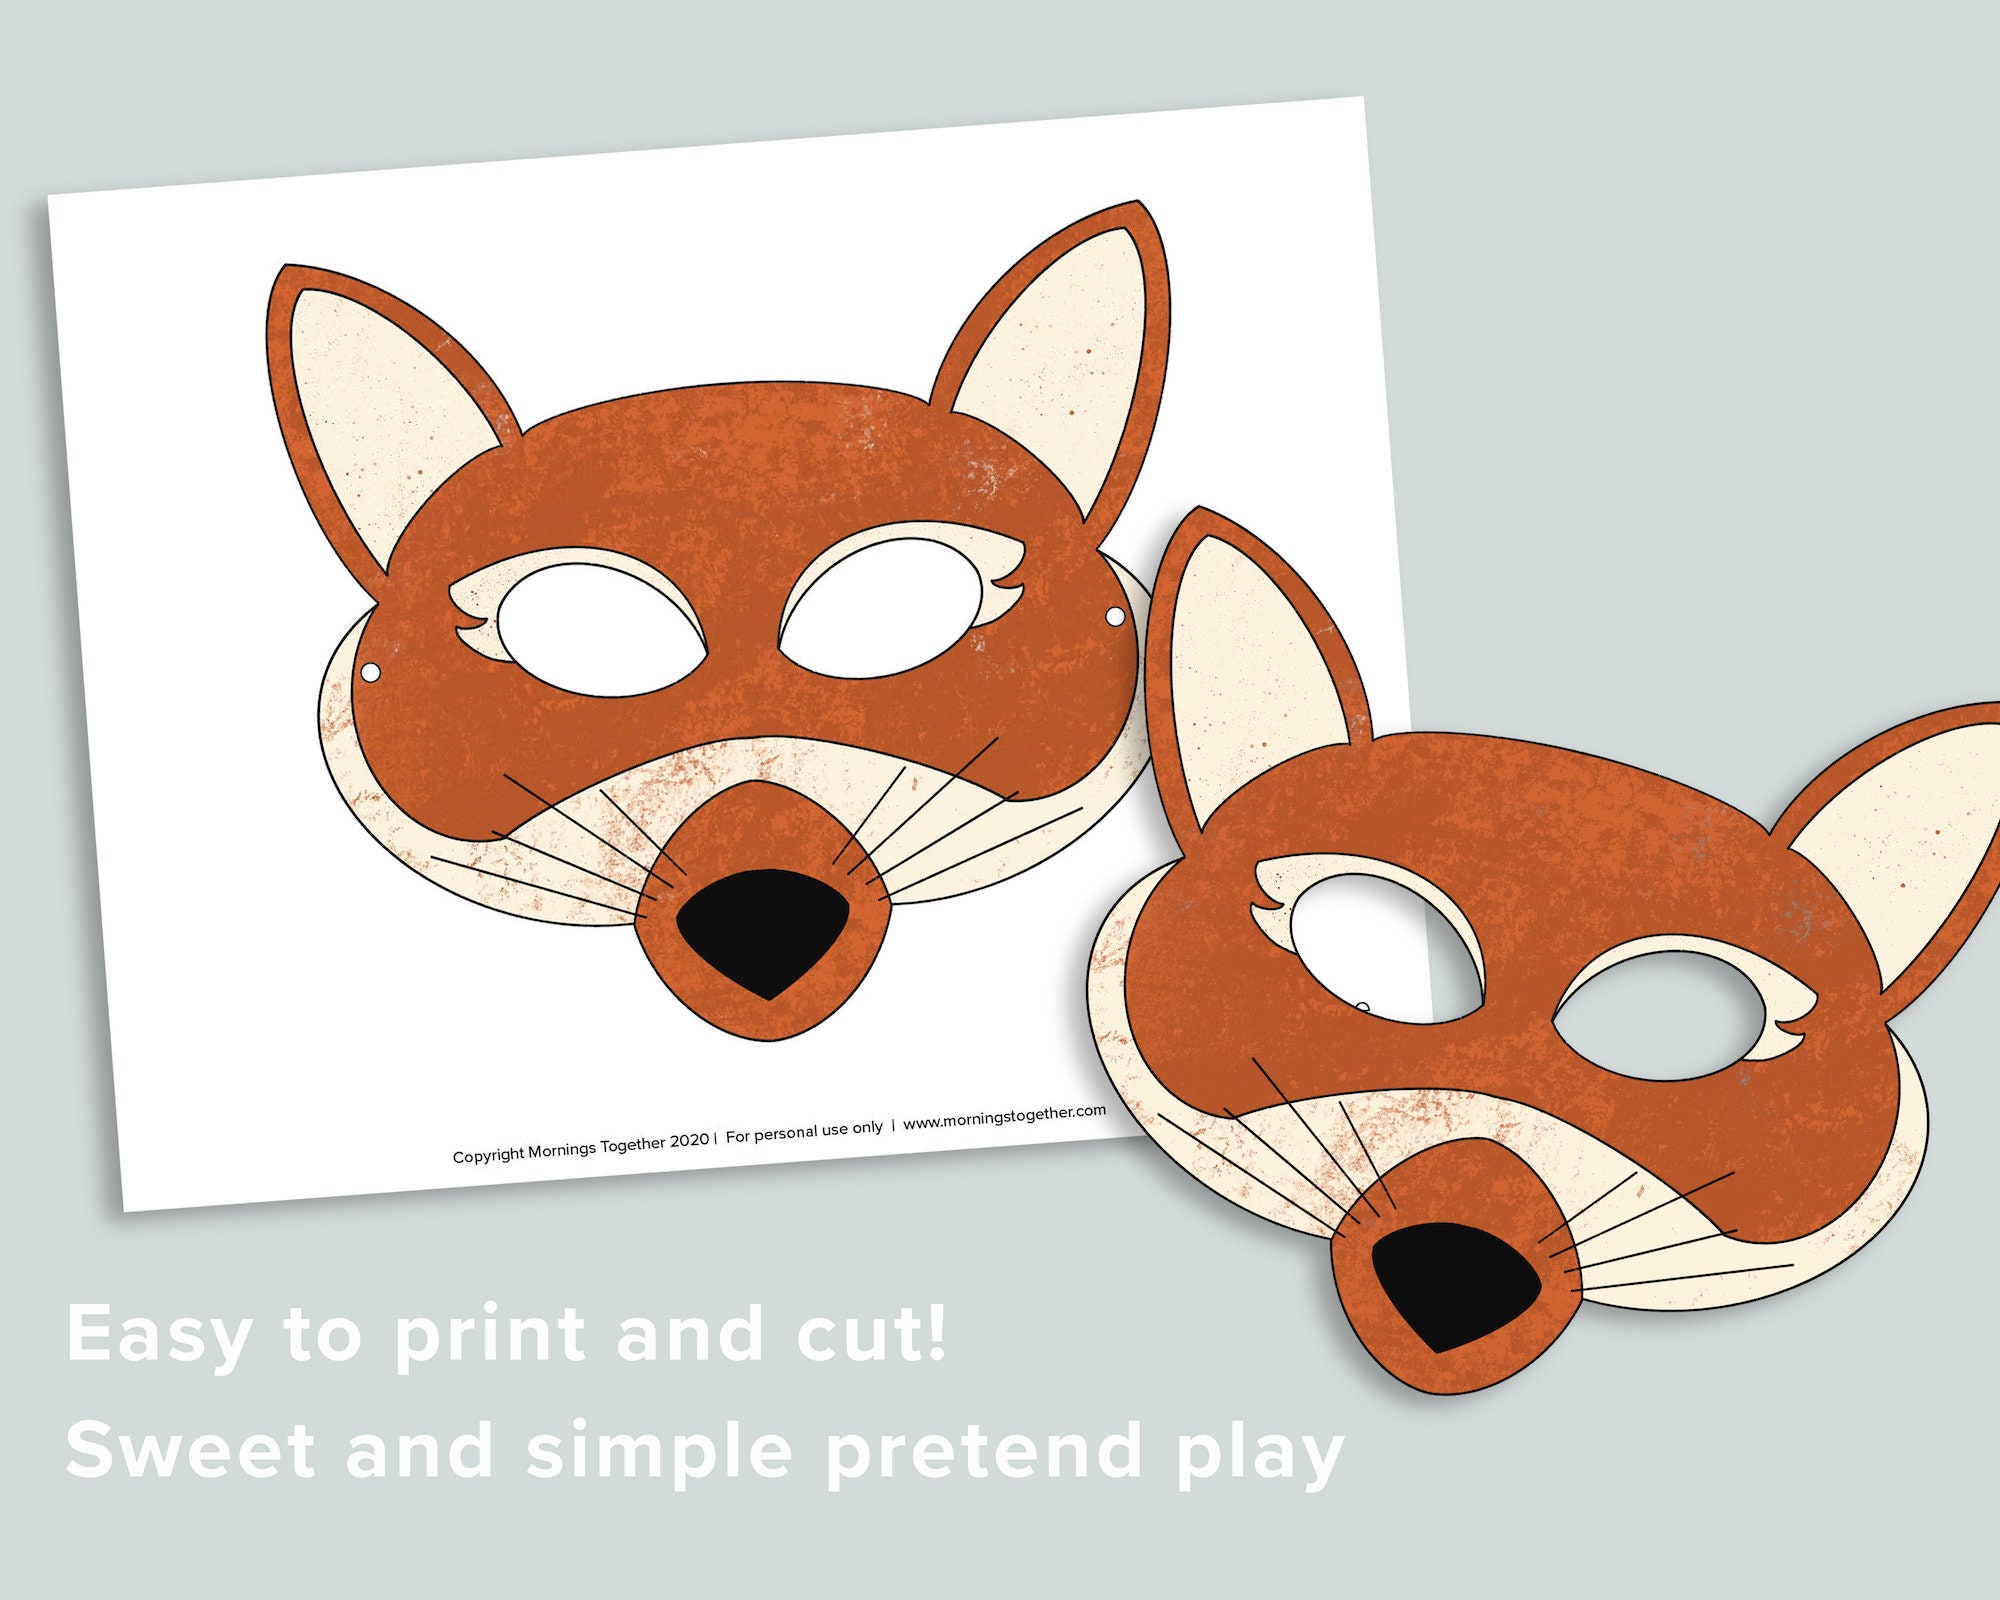 Woodland animal masks - Printable kids craft template - Happy